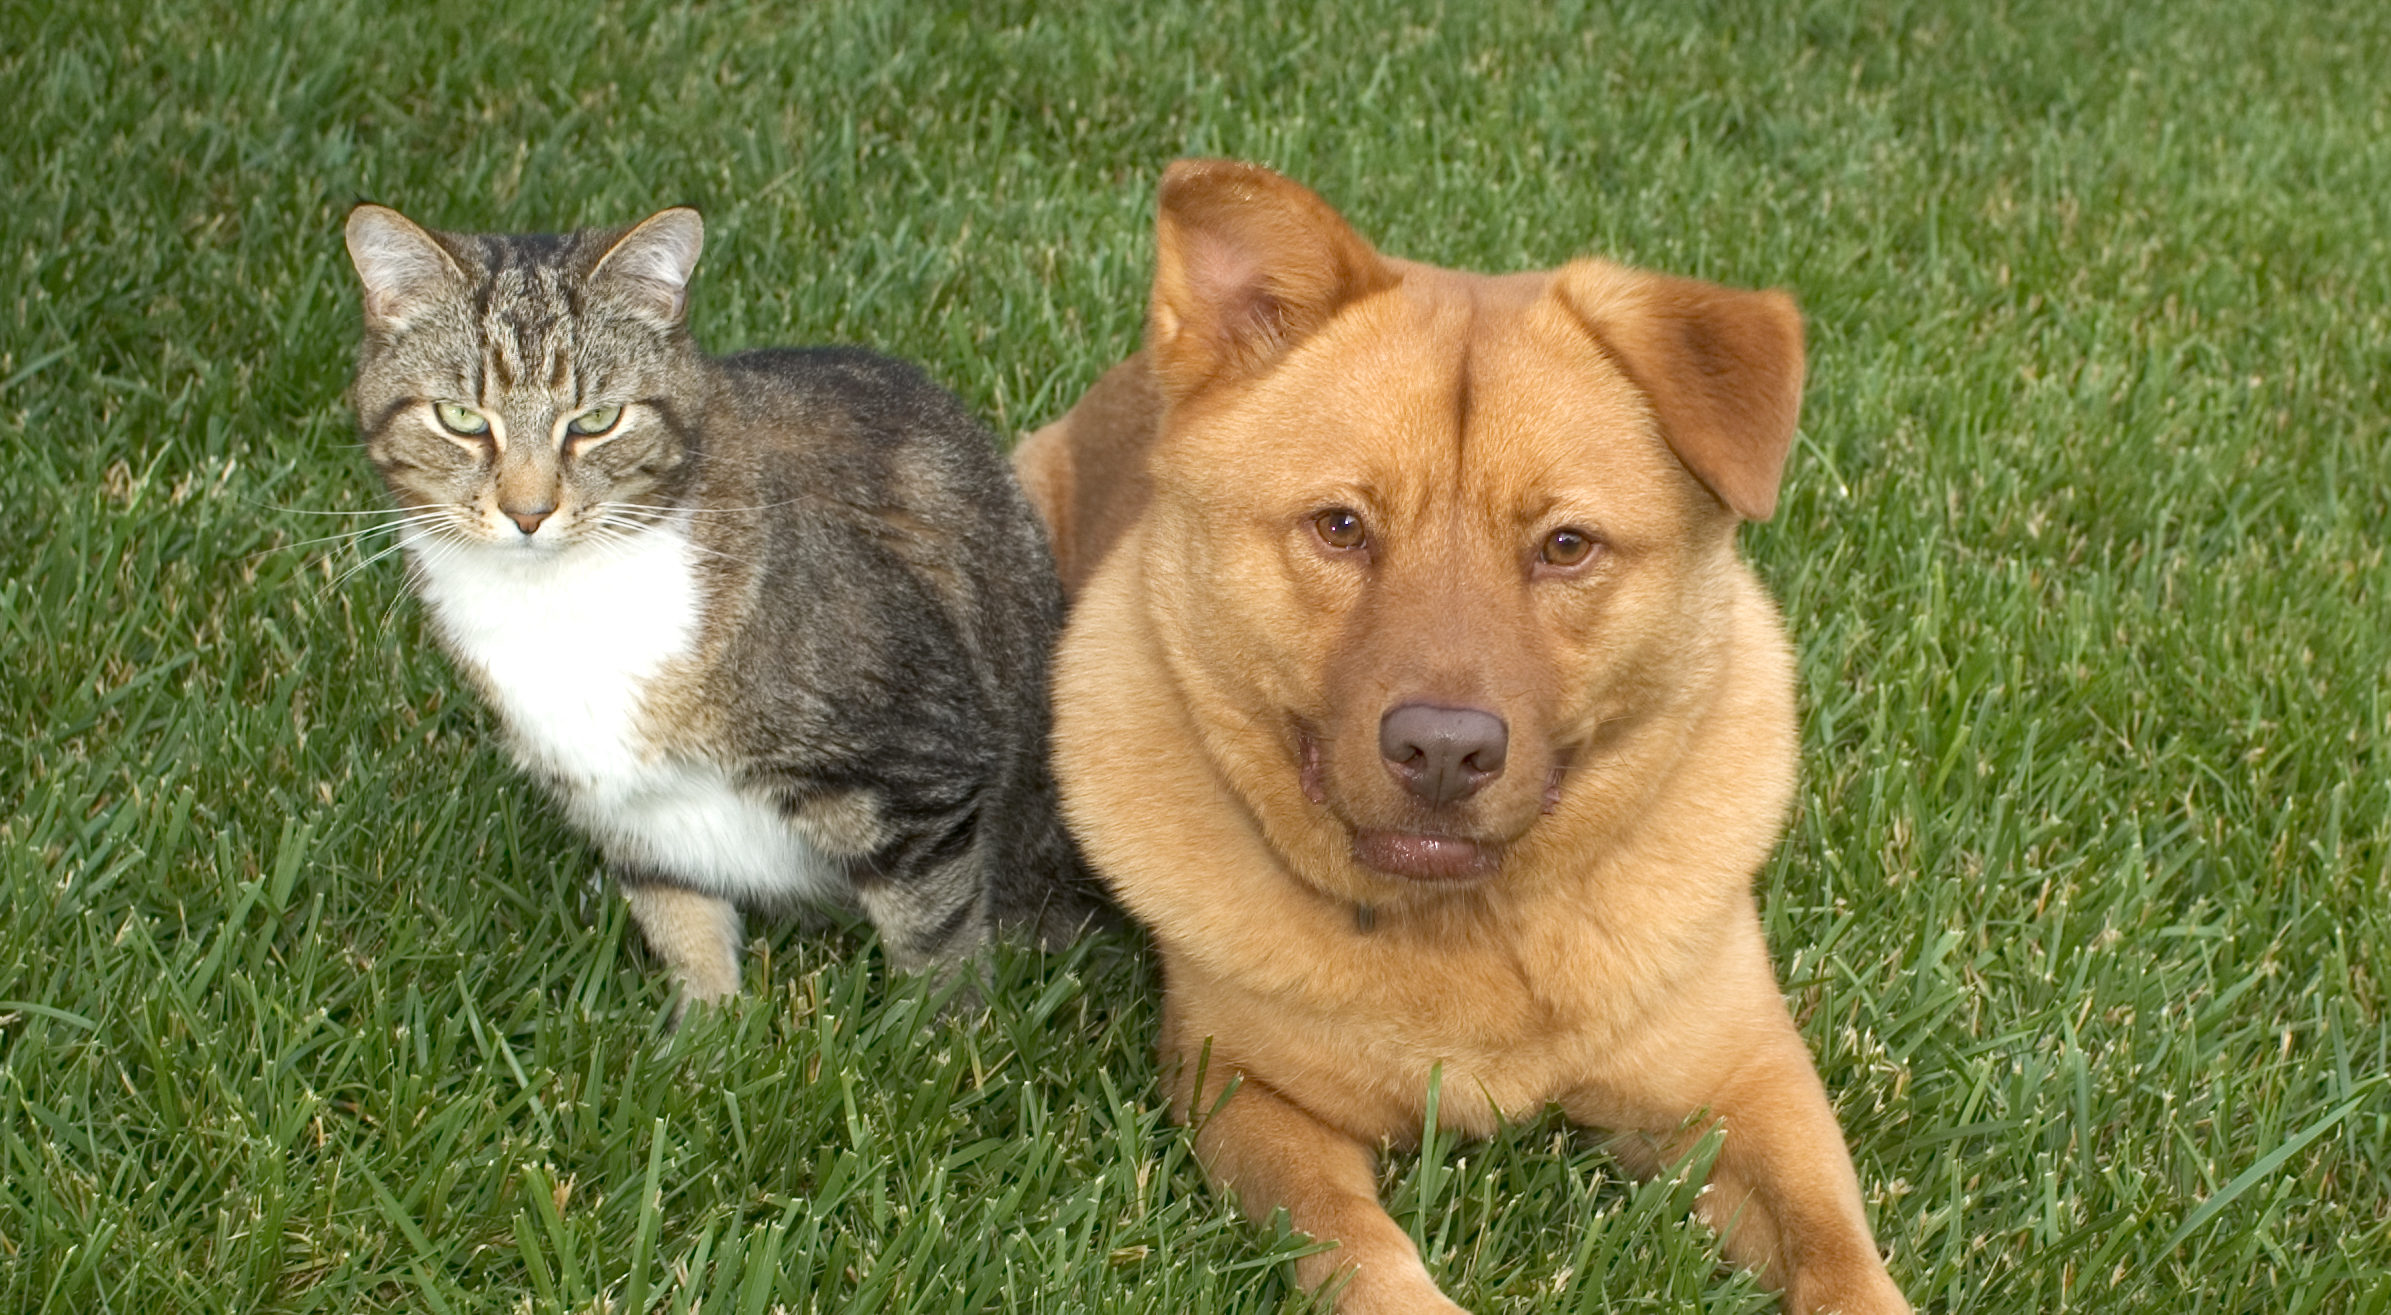 A Gray Tabby Cat with a Tan Chow Dog companion on grass